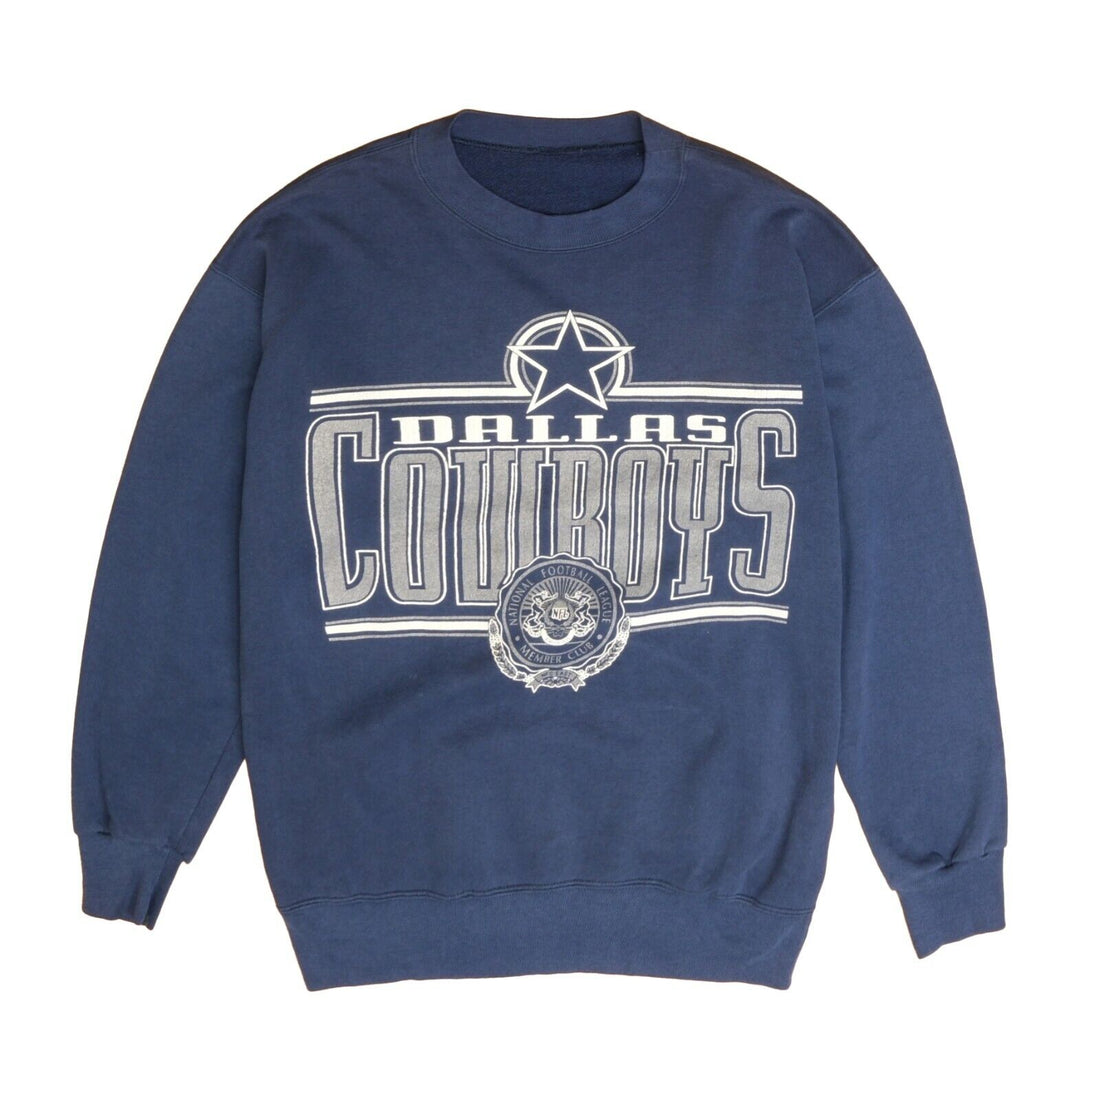 Vintage Dallas Cowboys Sweatshirt Crewneck Size Medium Blue NFL